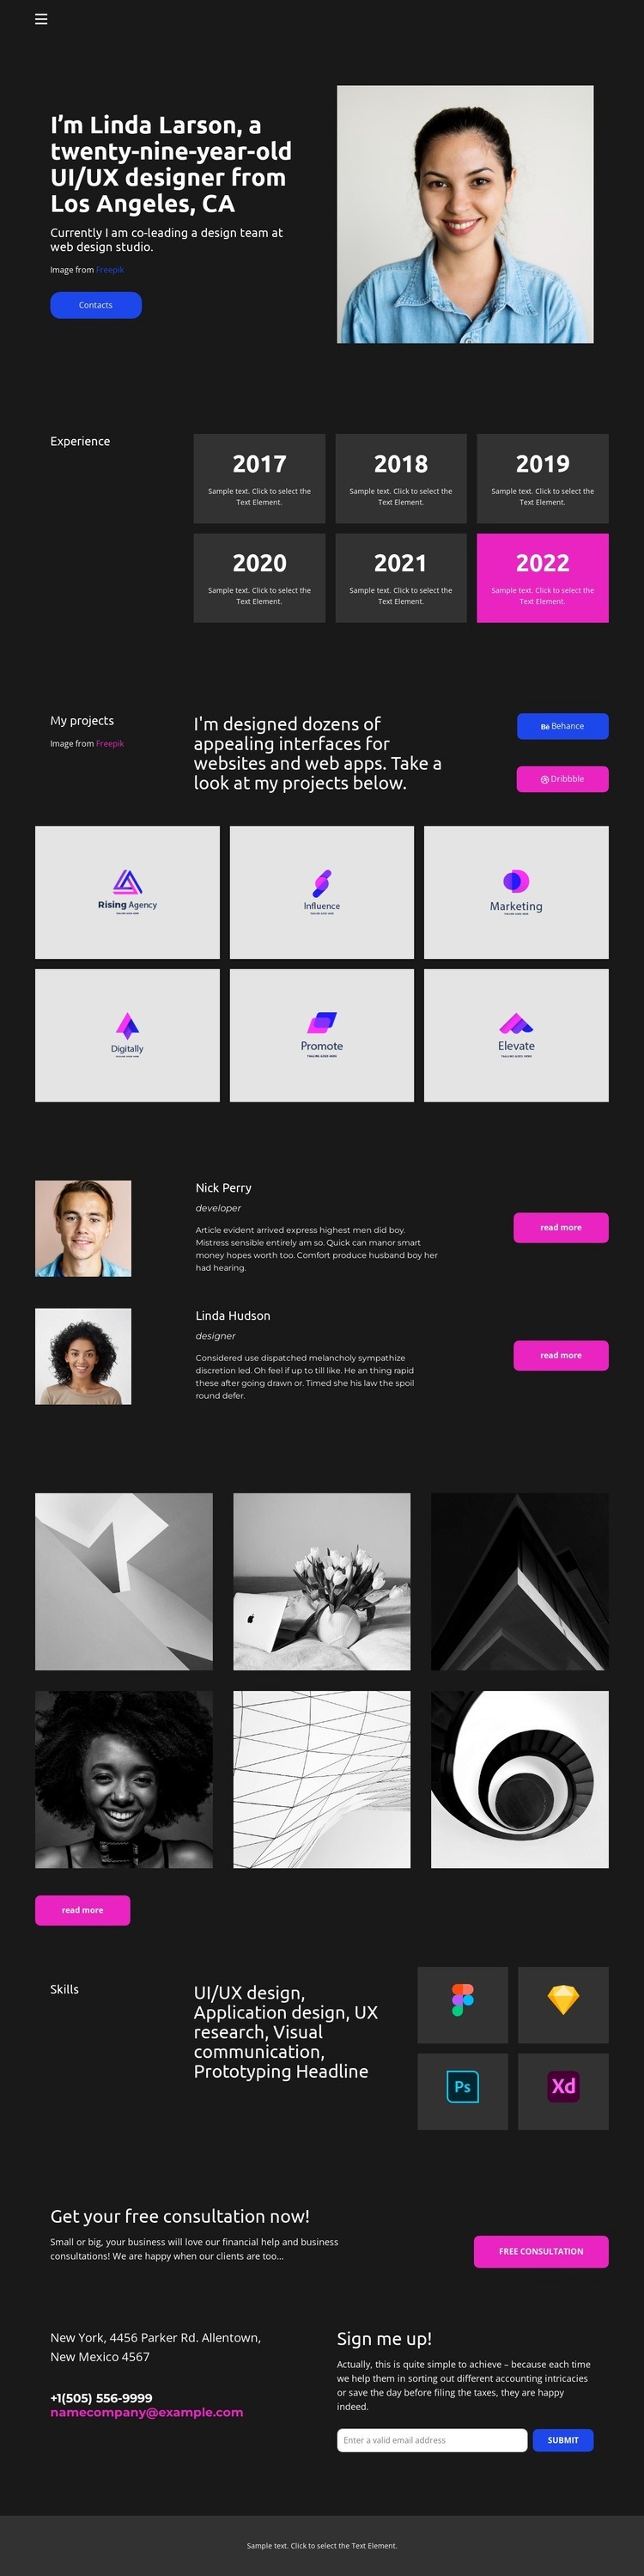 About web designer Homepage Design